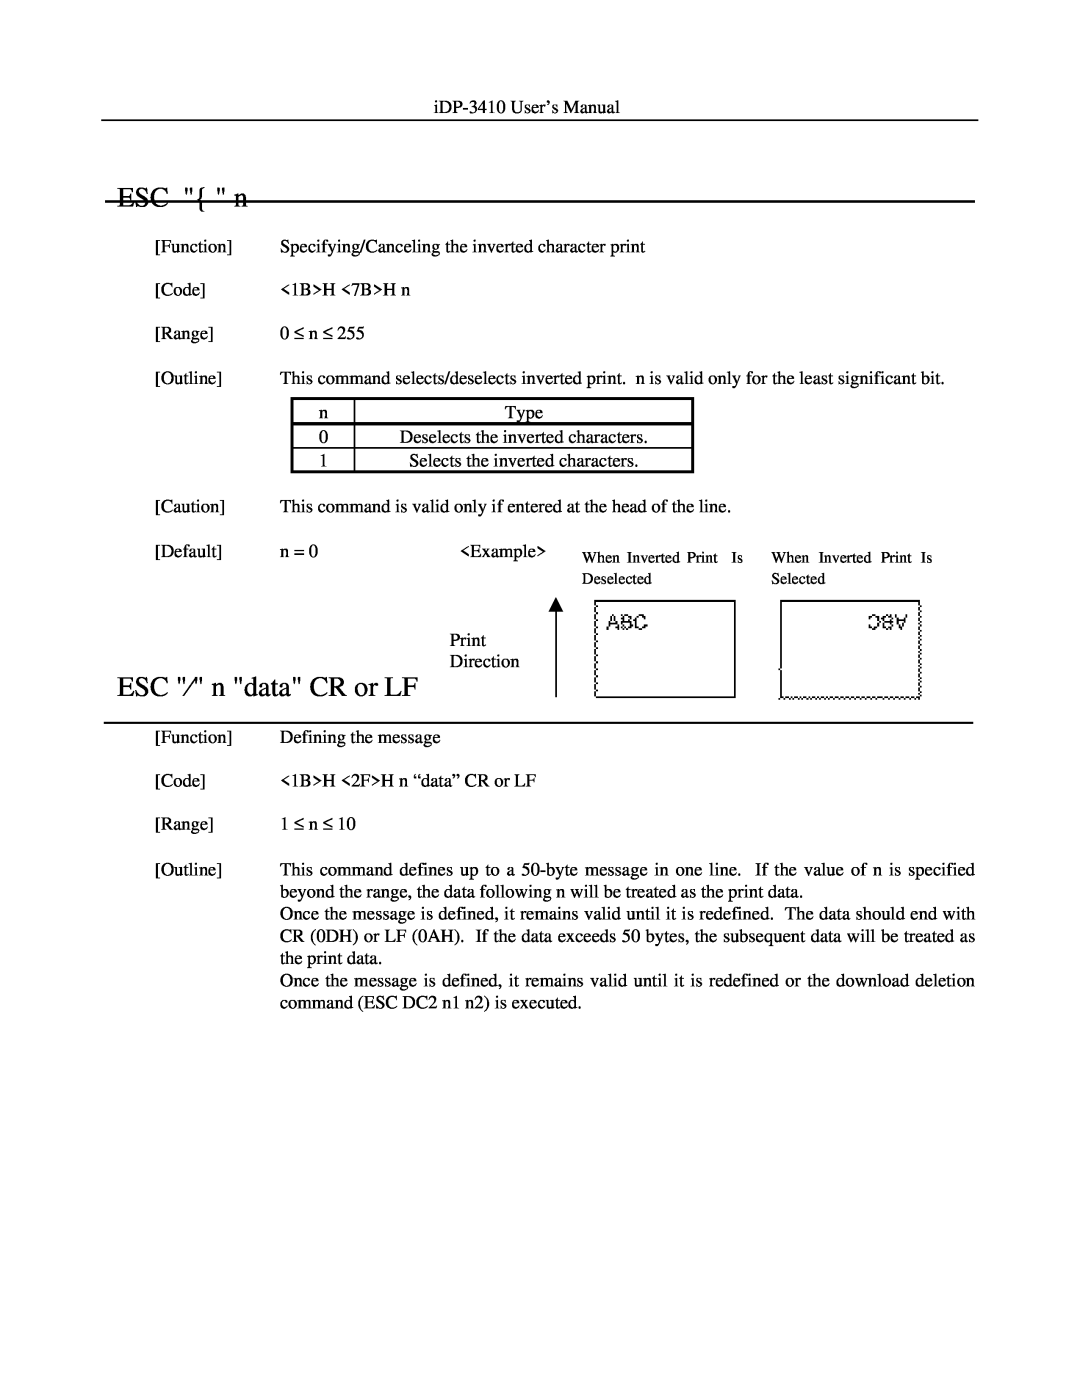 Addlogix iDP-3410 user manual ESC n, ESC ⁄ n data CR or LF 